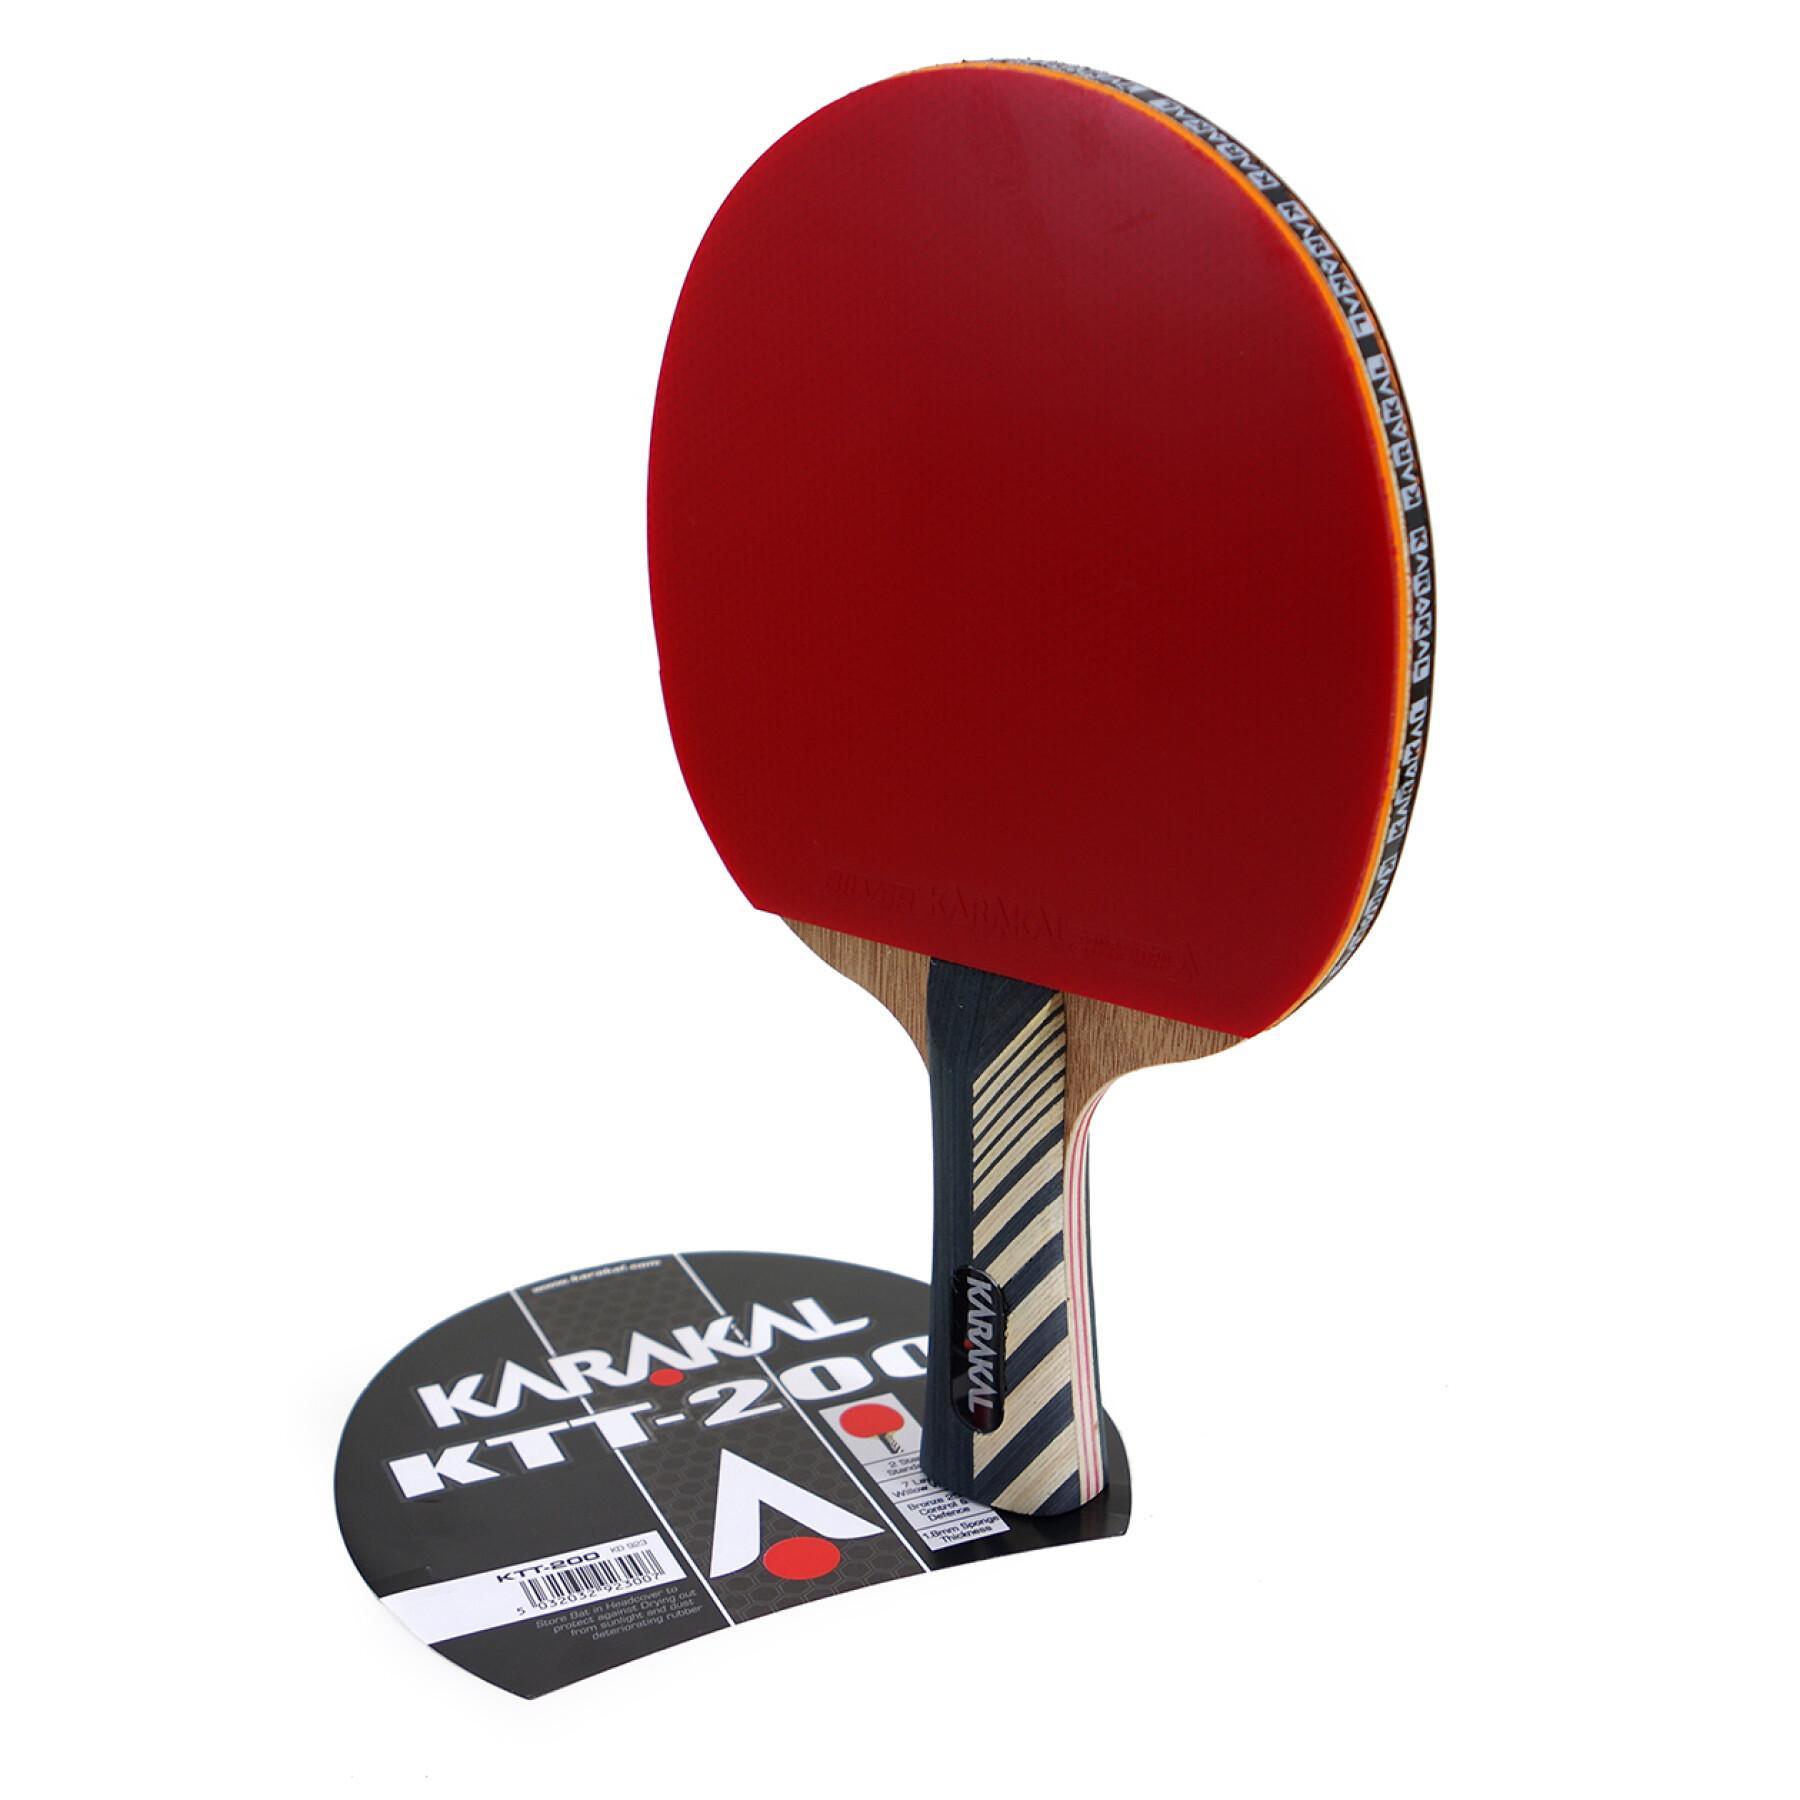 Raqueta de tenis de mesa Karakal KTT 200